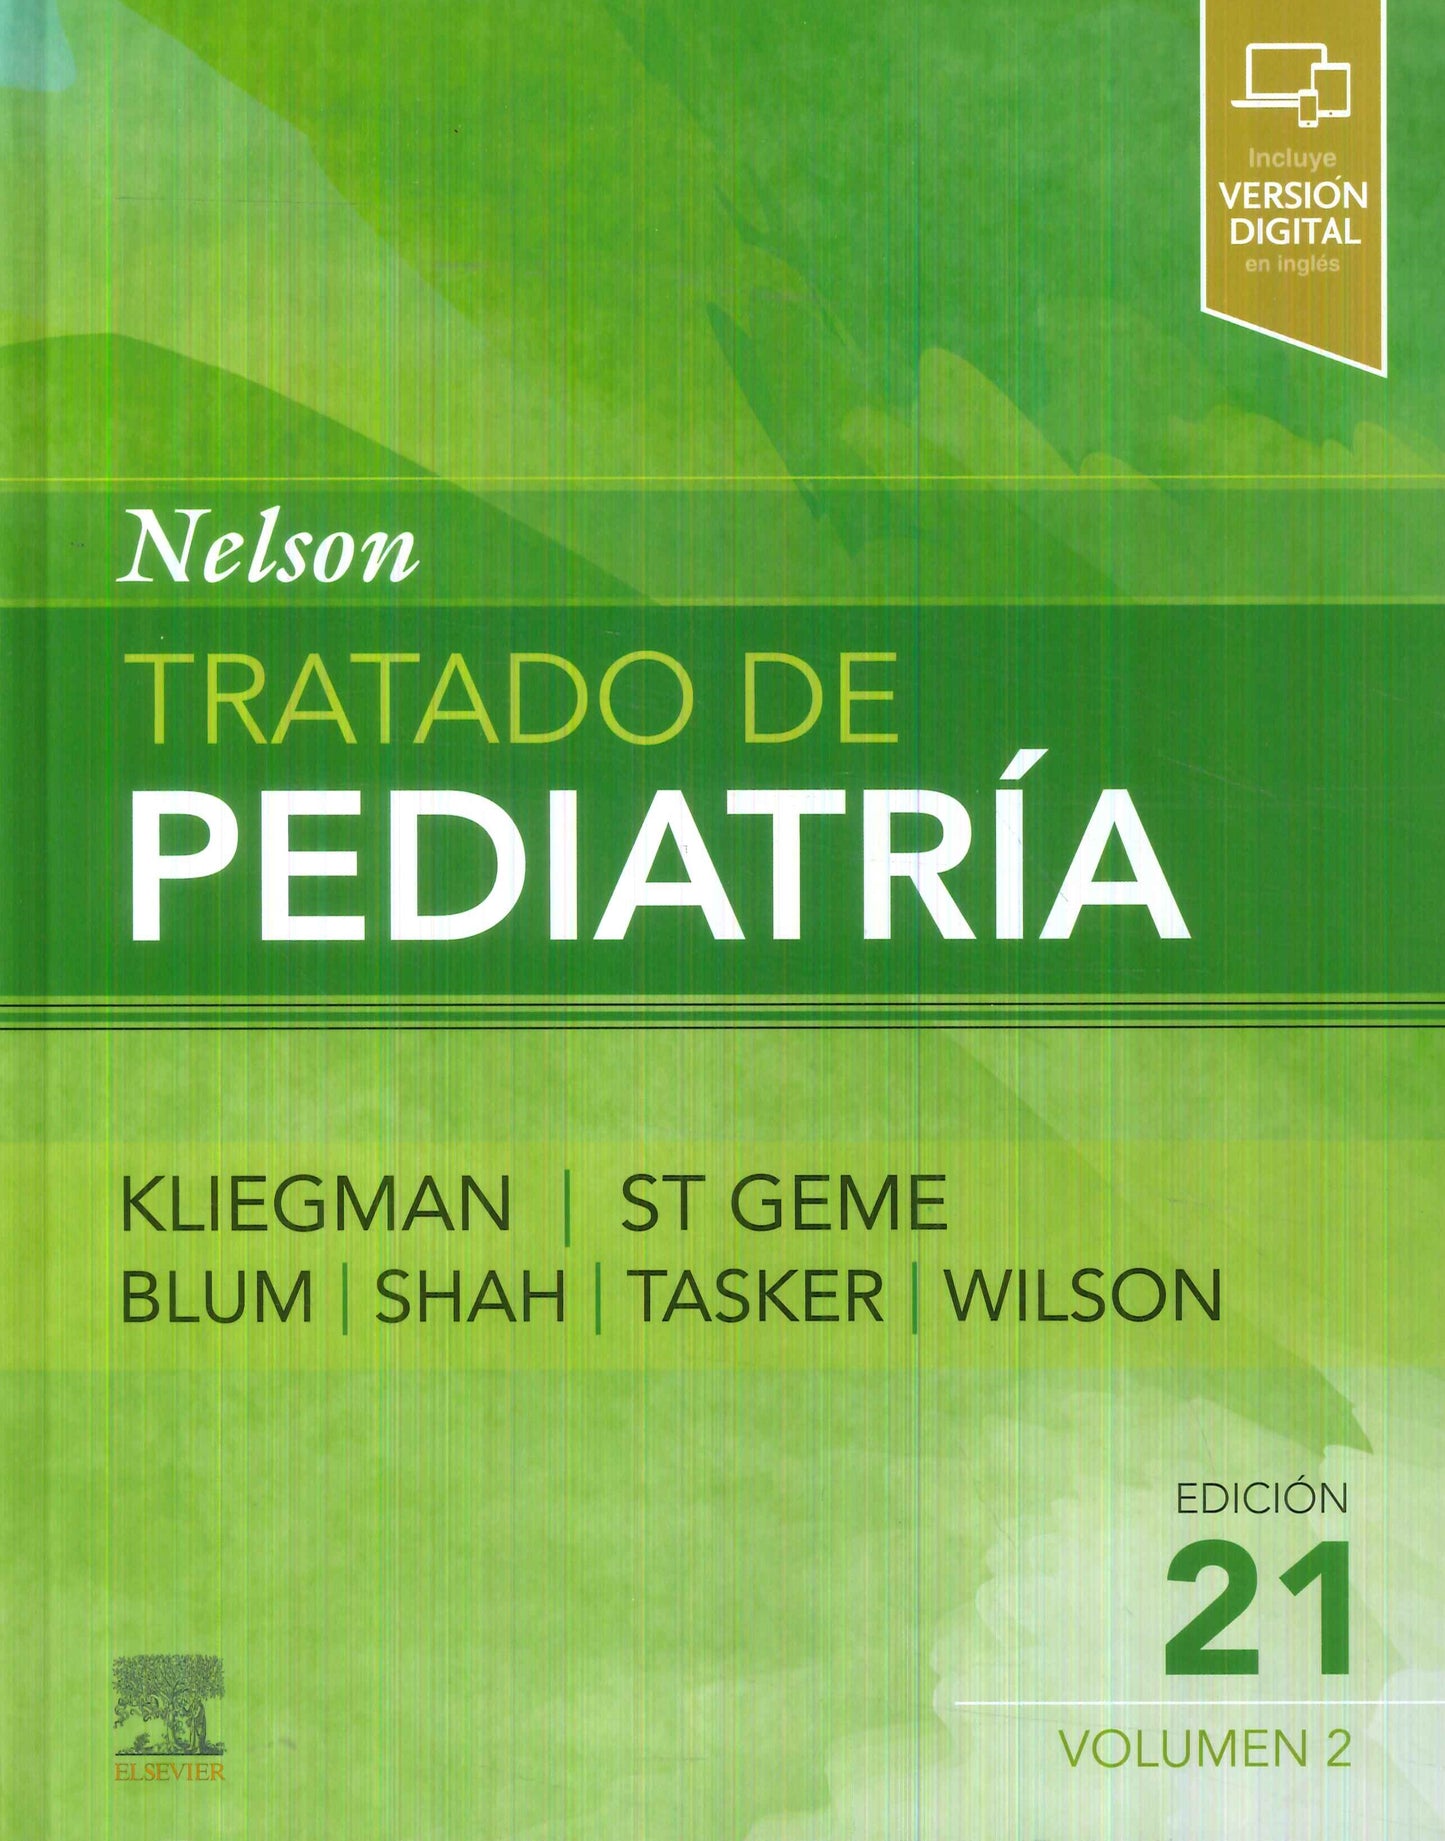 NELSON - TRATADO DE PEDIATRIA ED21